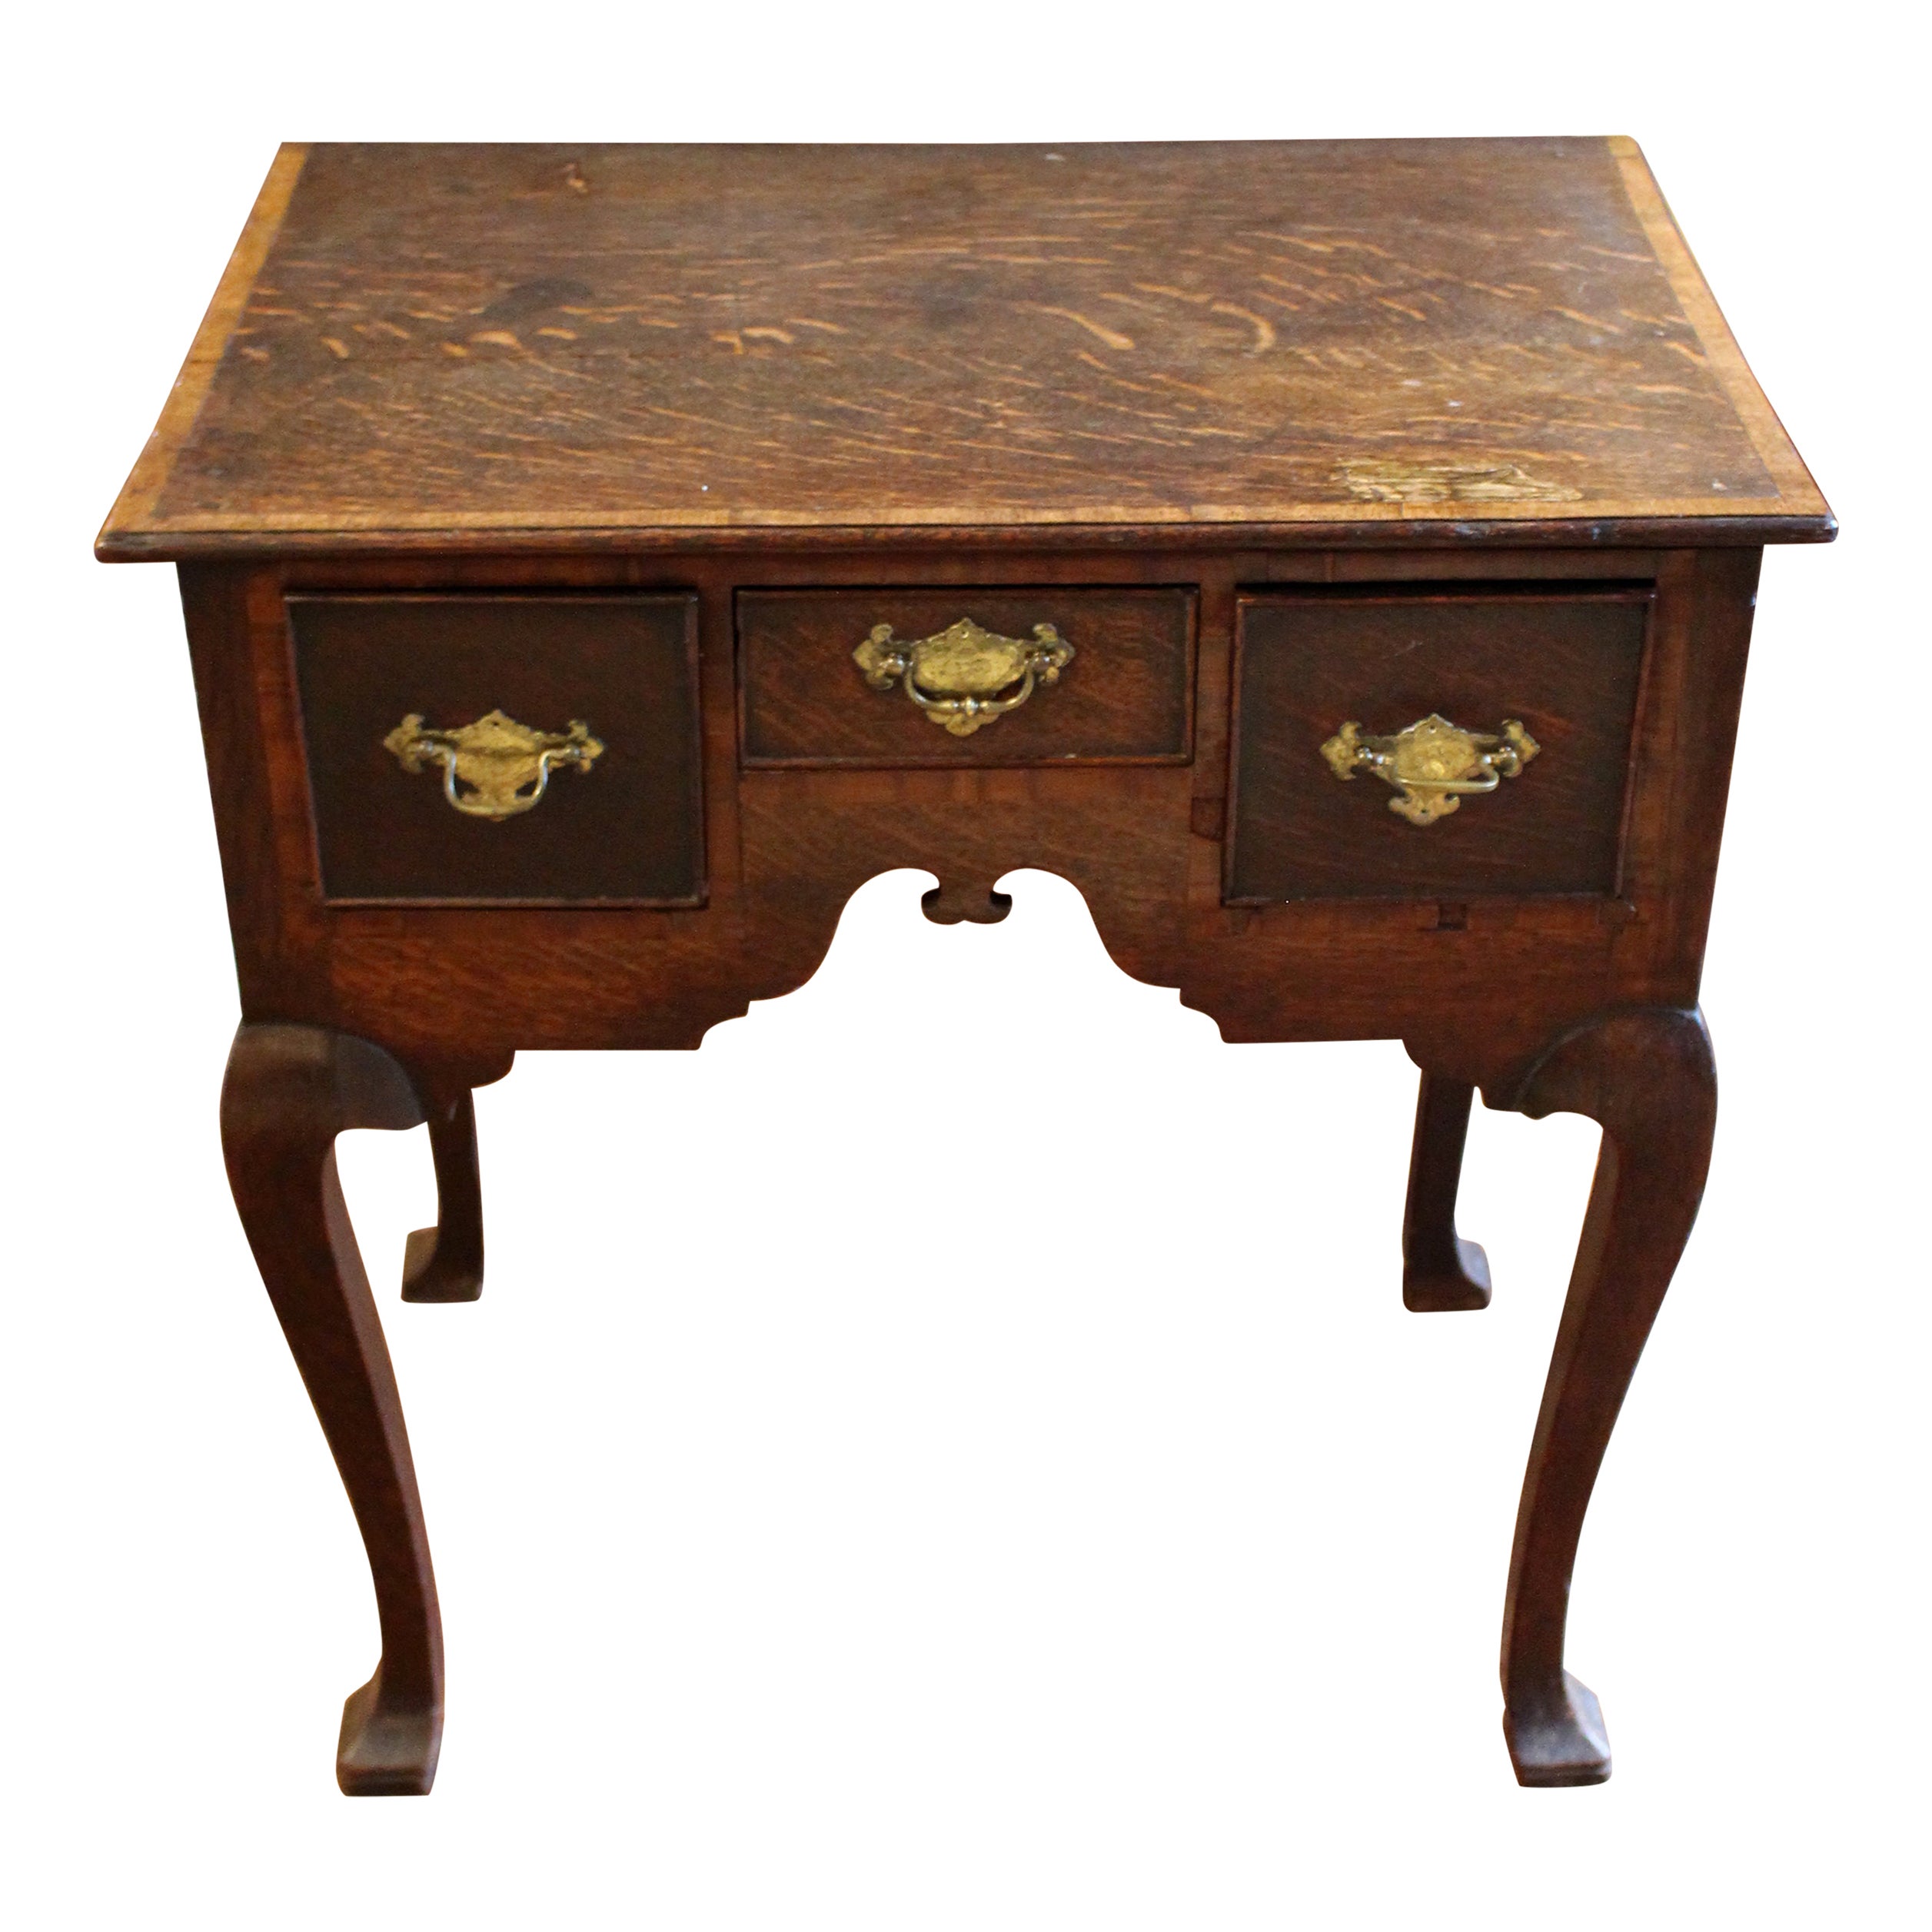 Circa 1730 English Country Oak Lowboy or Dressing Table